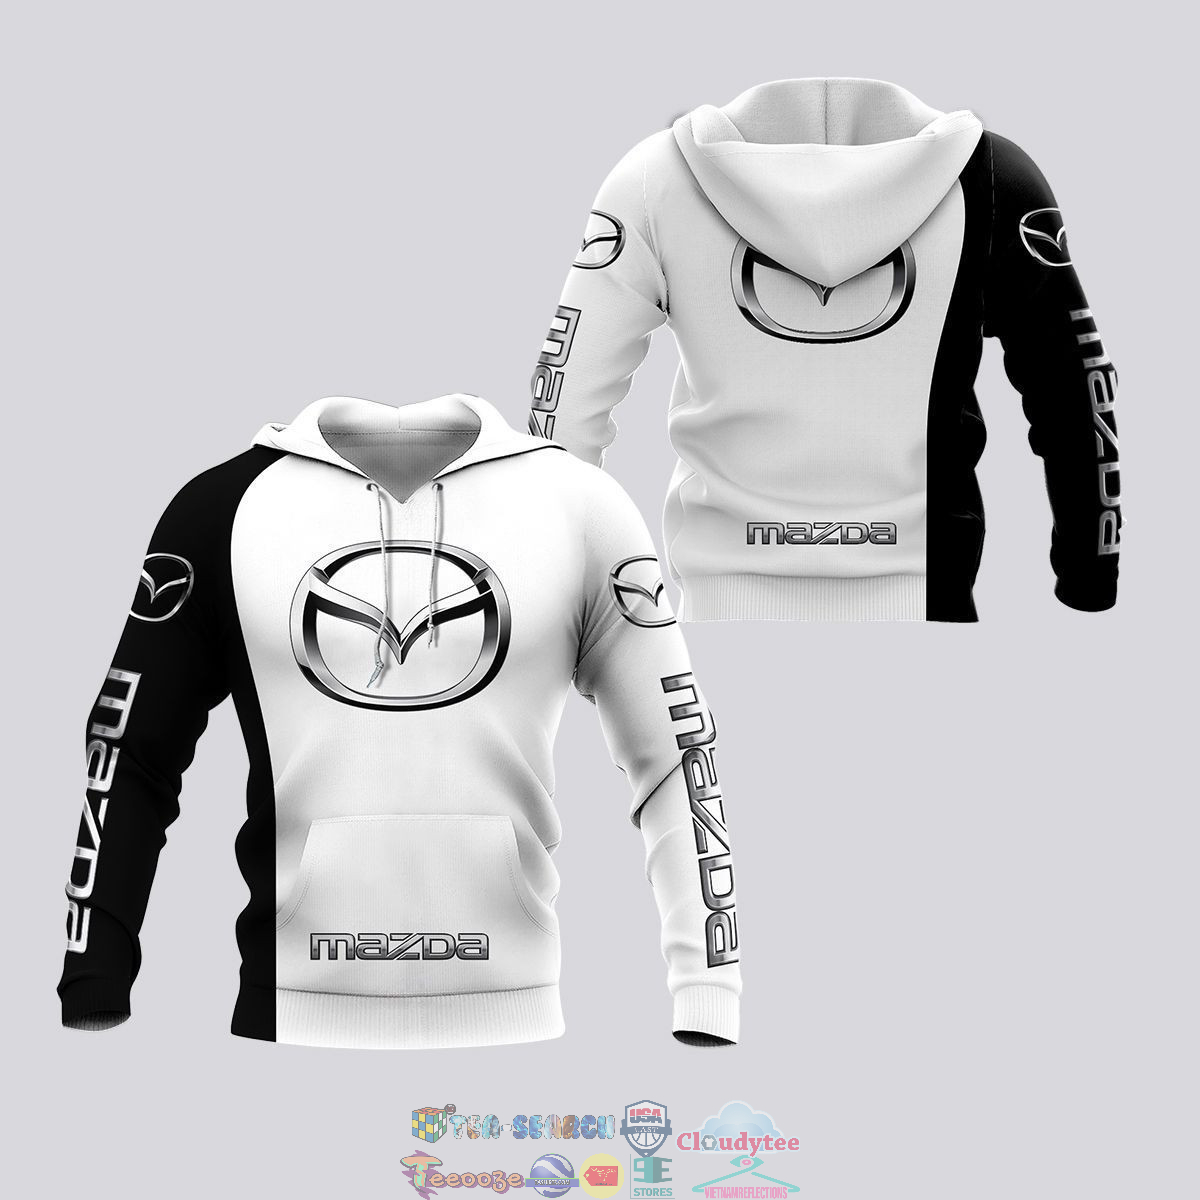 Mazda ver 13 3D hoodie and t-shirt – Saleoff